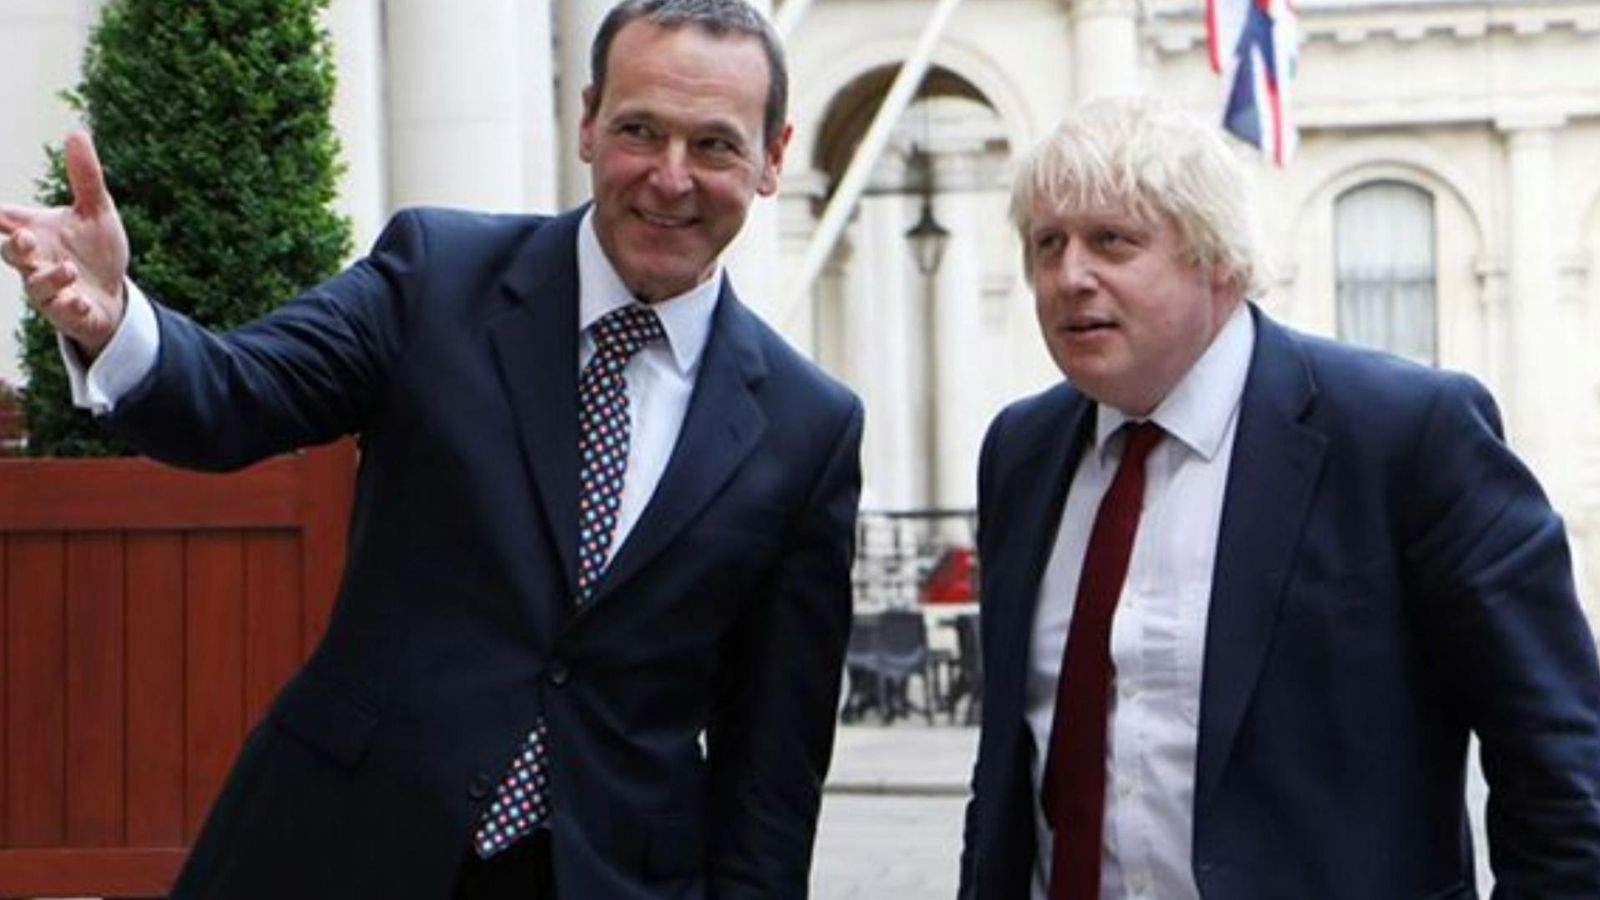 Ex-top civil servant Sir Simon McDonald says Boris Johnson was worst PM he worked under